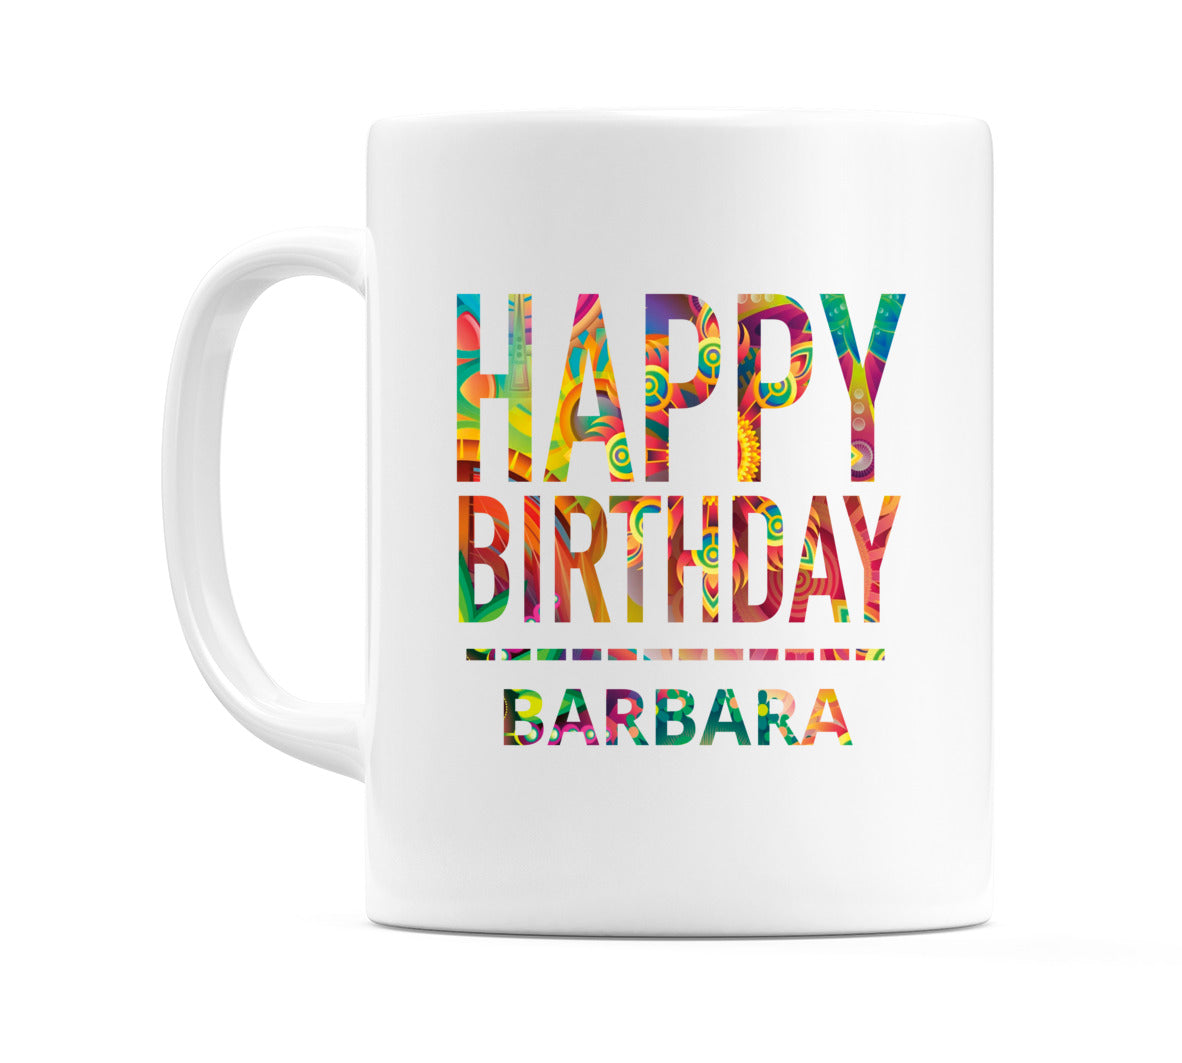 Happy Birthday Barbara (Tie Dye Effect) Mug Cup by WeDoMugs